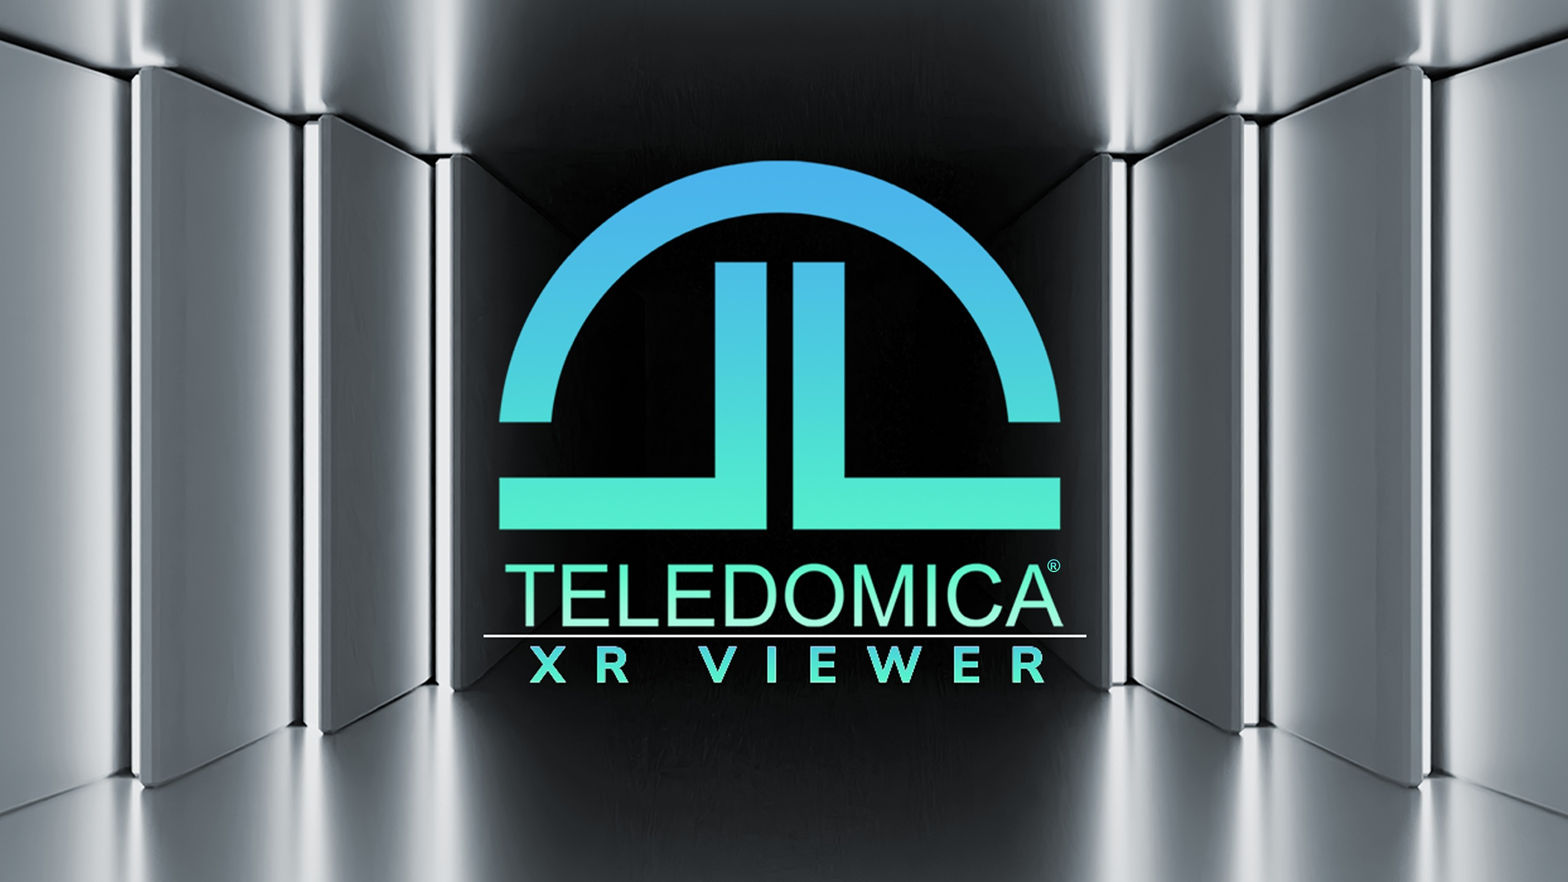 Teledomica XR Viewer